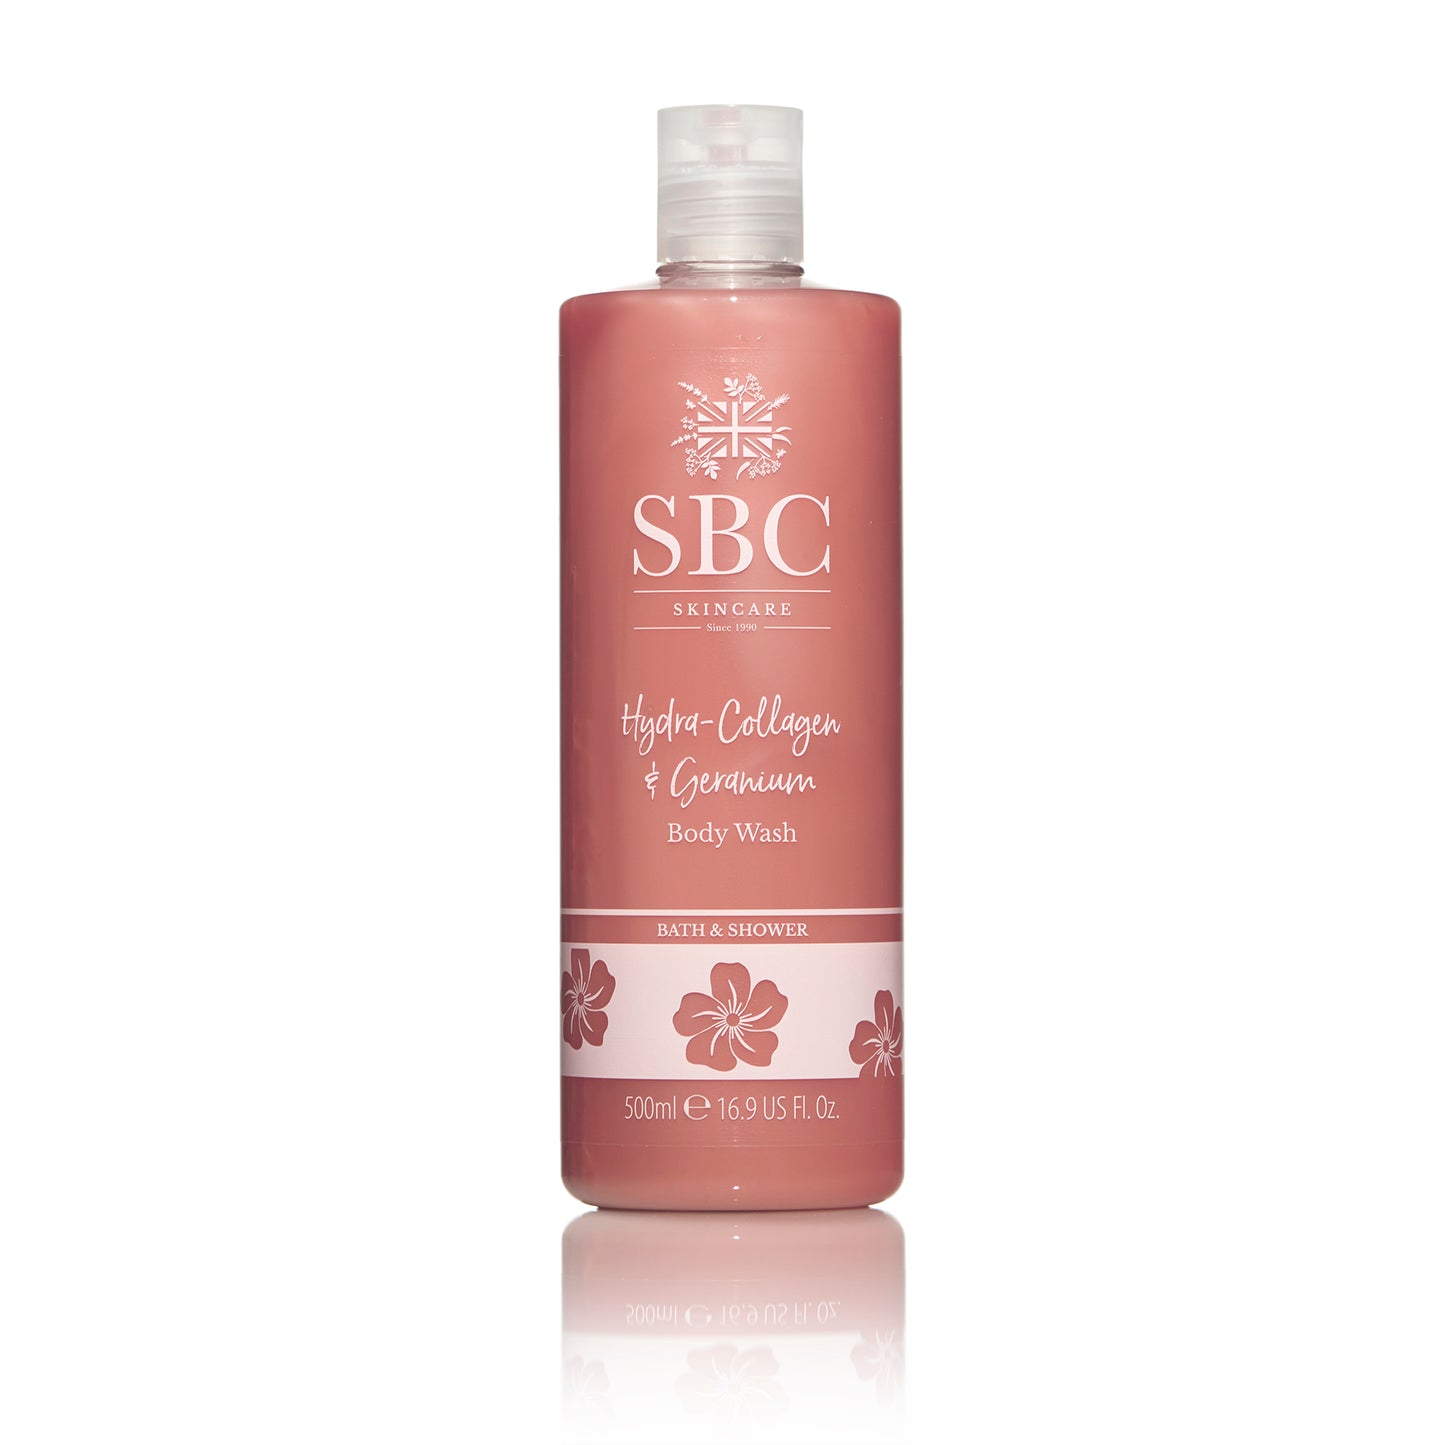 SBC Skincare's Hydra-Collagen & Geranium Body Wash on a white background 